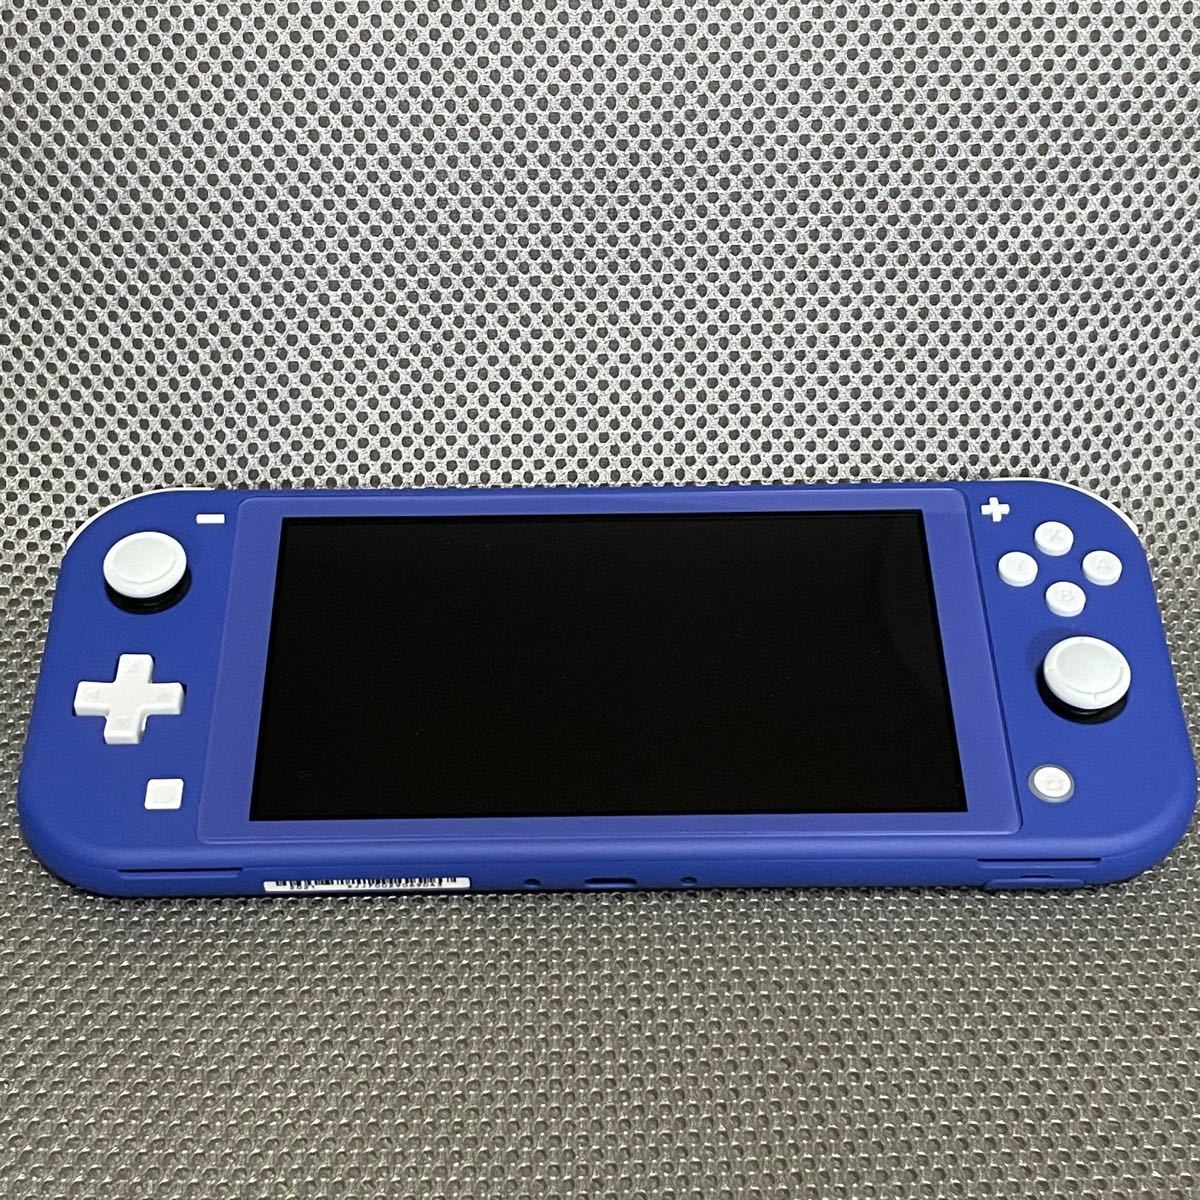 HOT即納 Nintendo Switch - Nintendo Switch Lite ブルーの通販 by